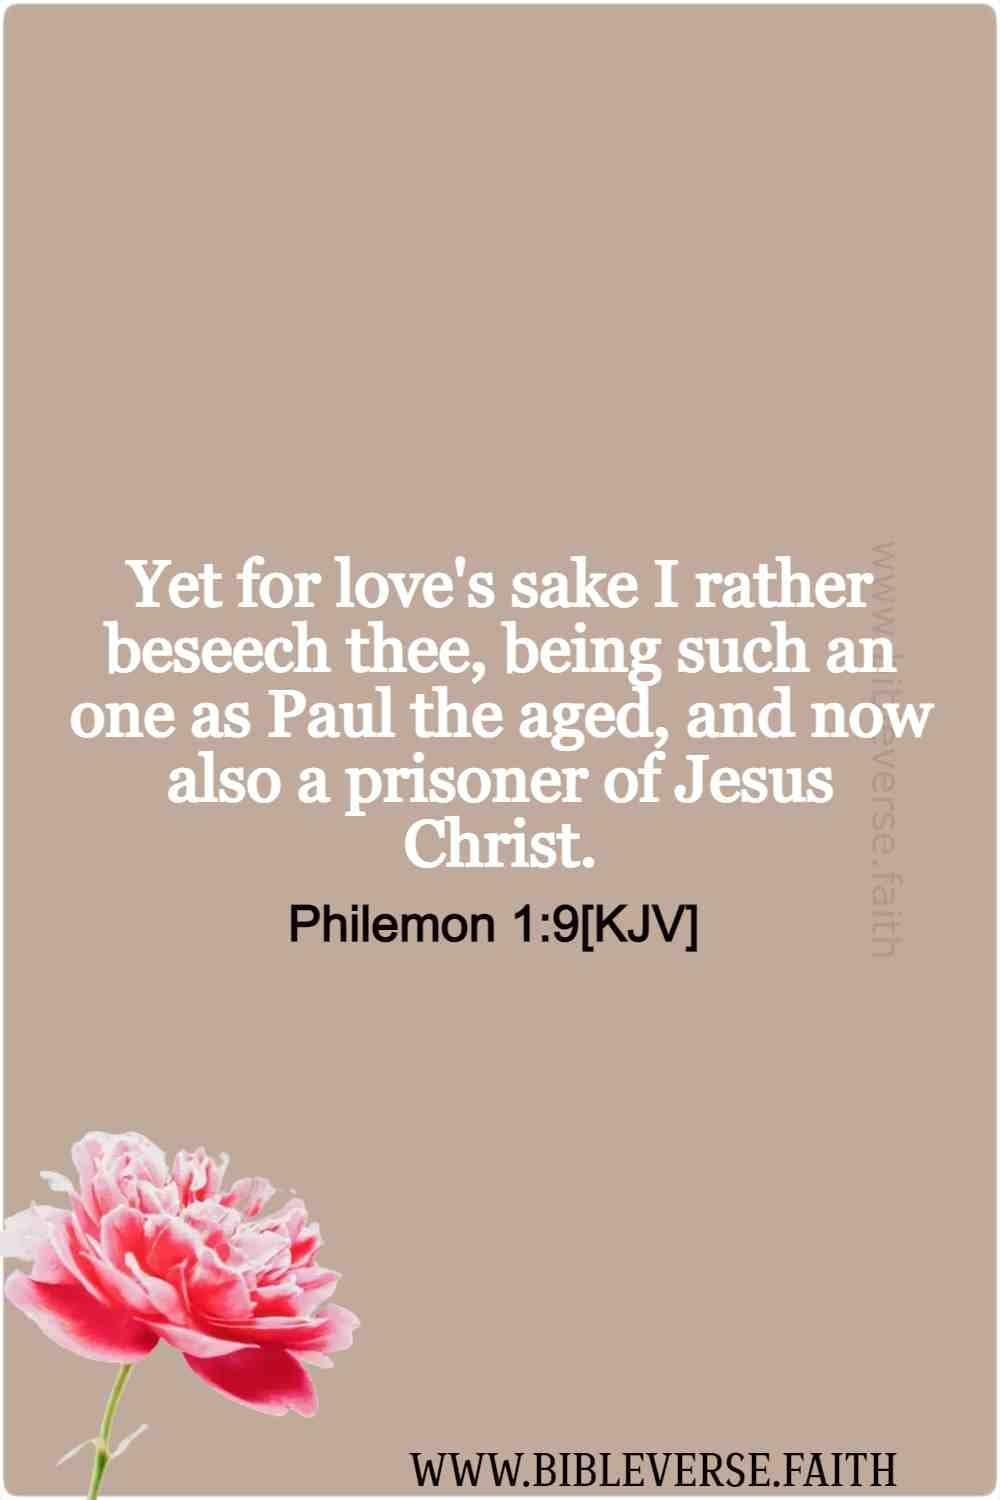 philemon 1 9[kjv] love one another bible verse